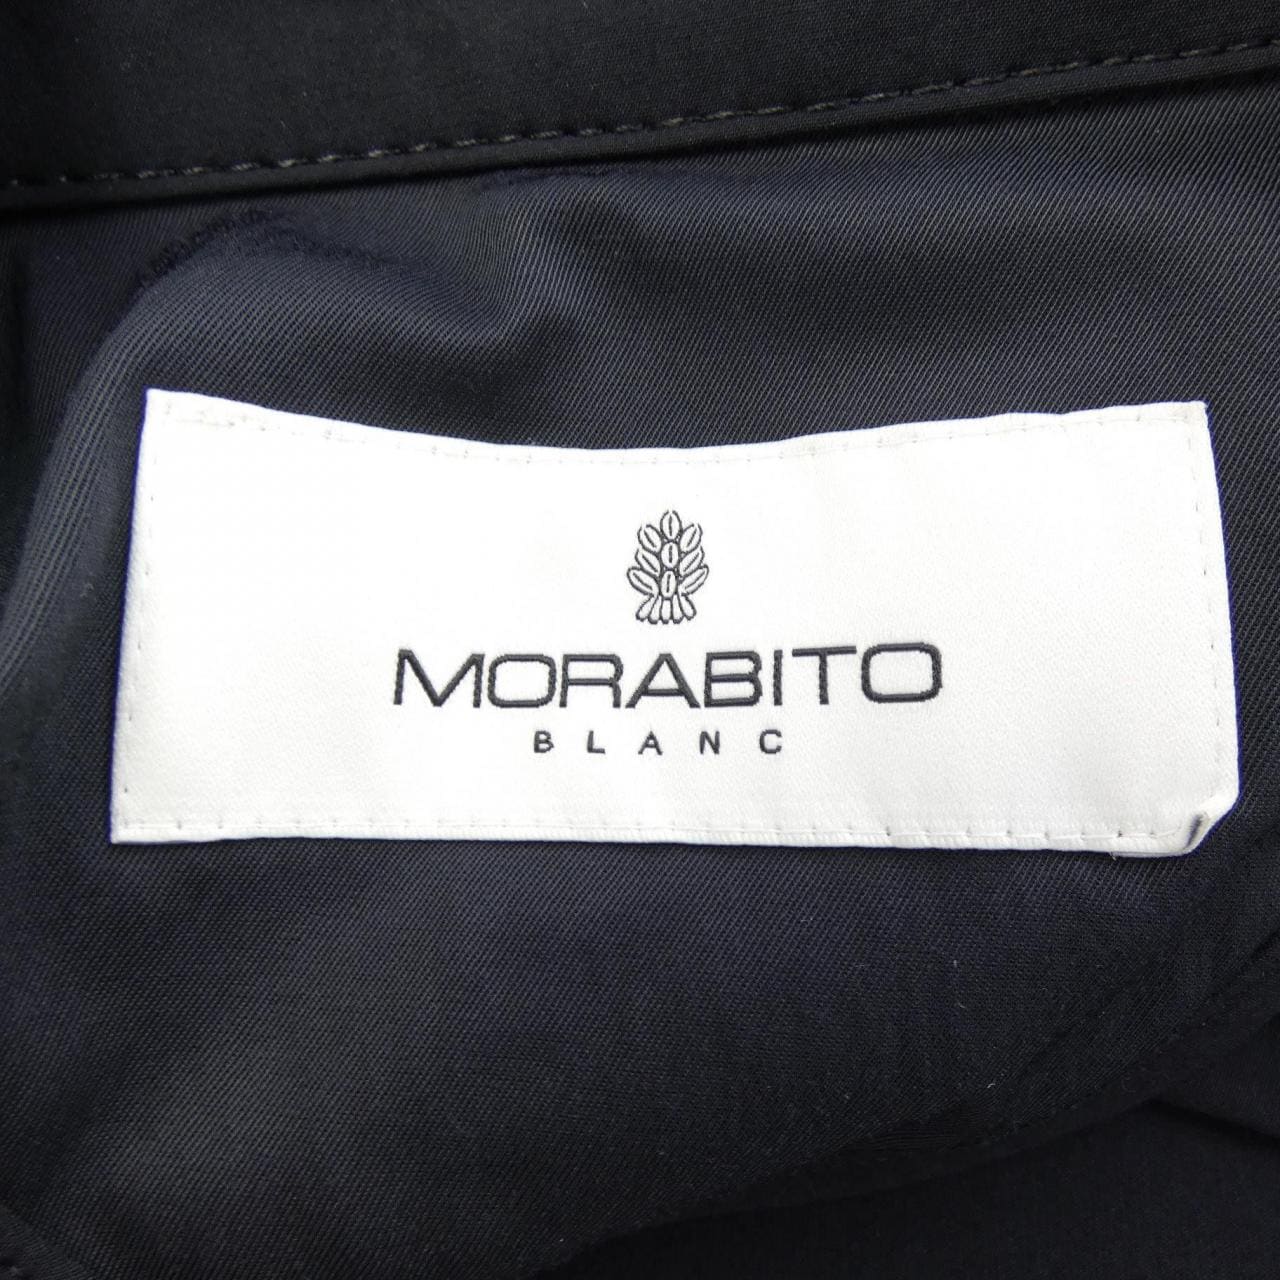 MORABITO BLANC jacket